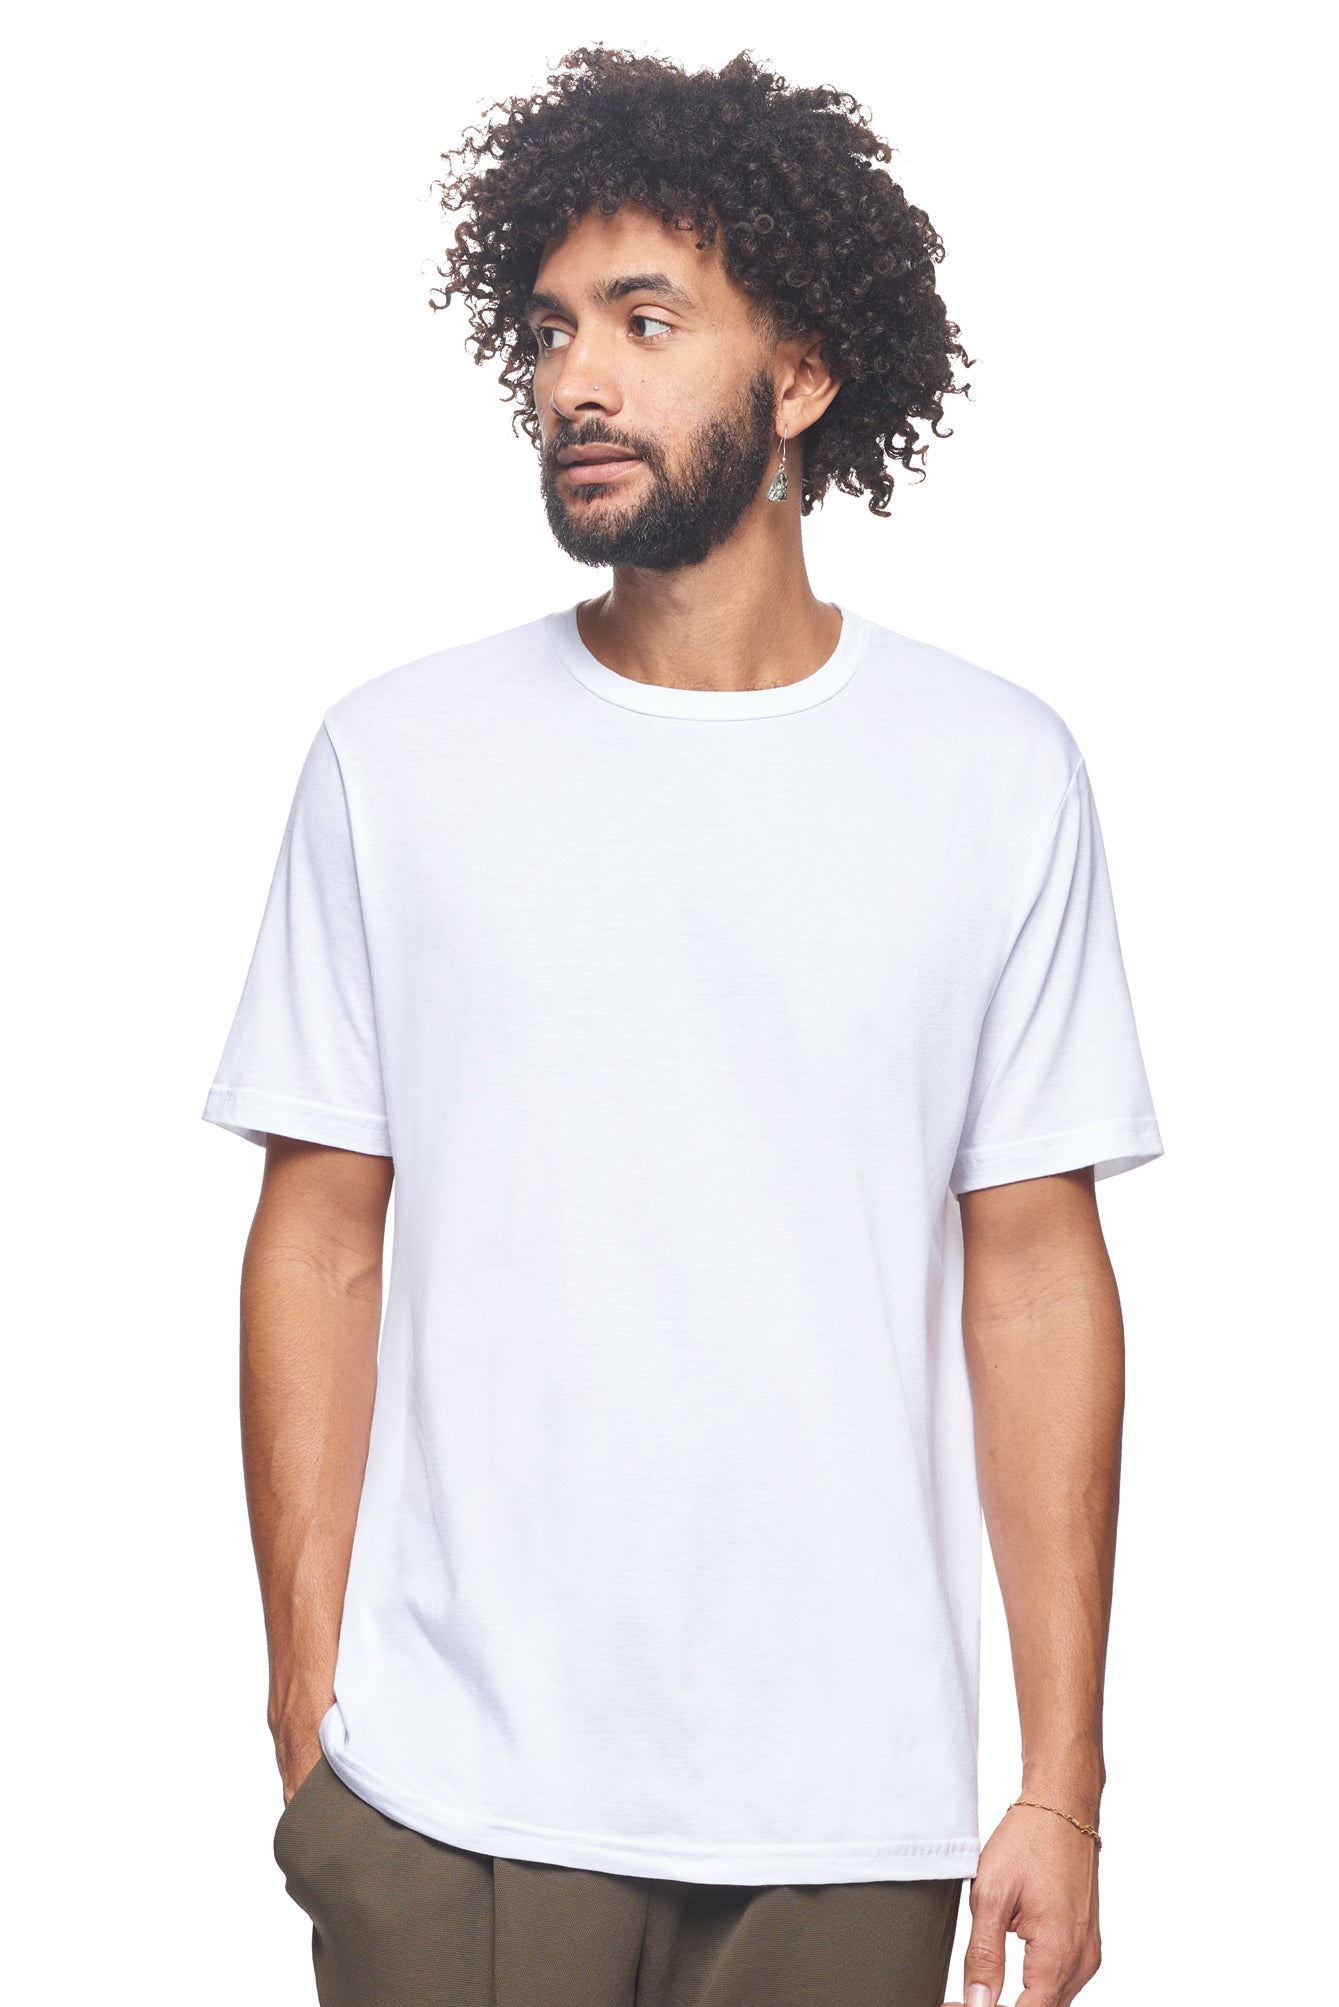 Expert Brand Wholesale Sustainable Eco-Friendly Hemp Organic Cotton Men's crewneck T-Shirt Made in the USA white#white